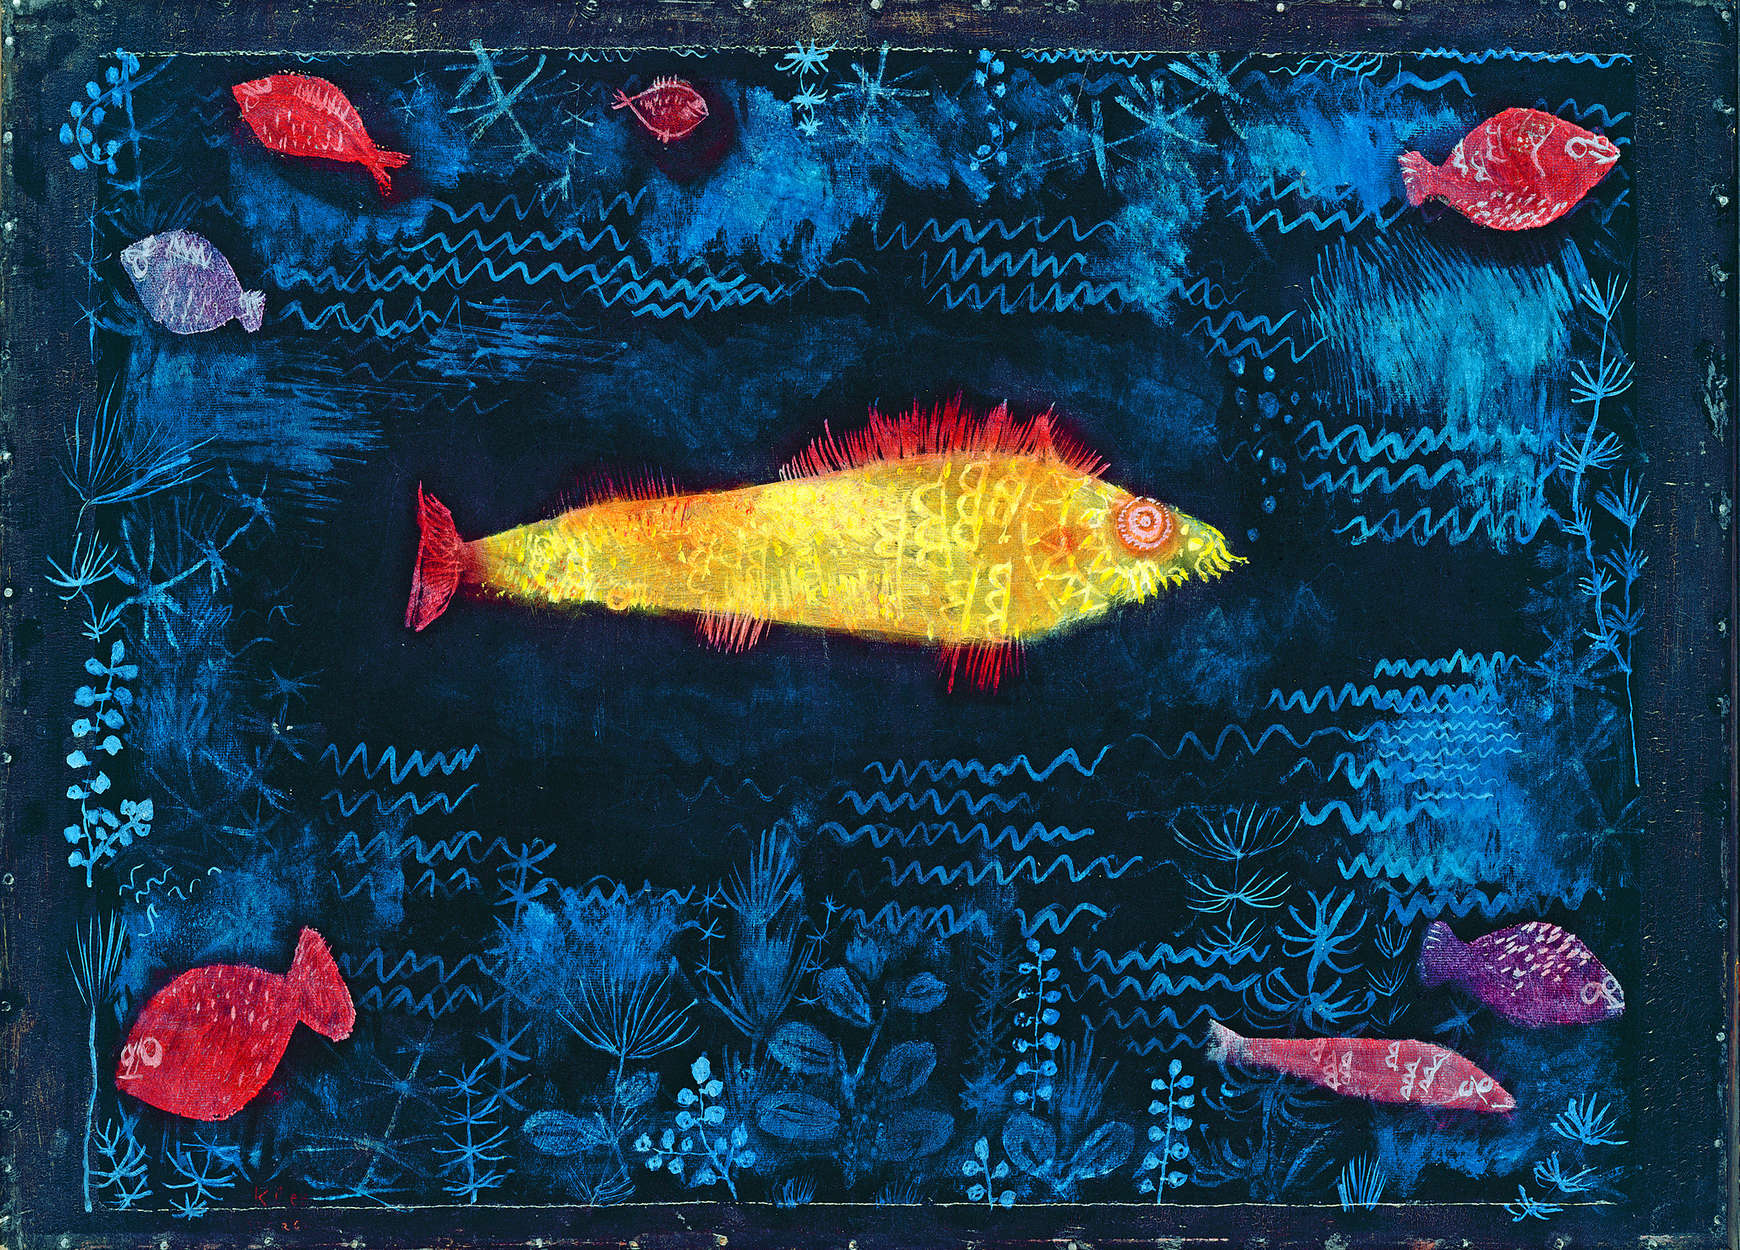             Fotomurali "Il pesce rosso" di Paul Klee
        